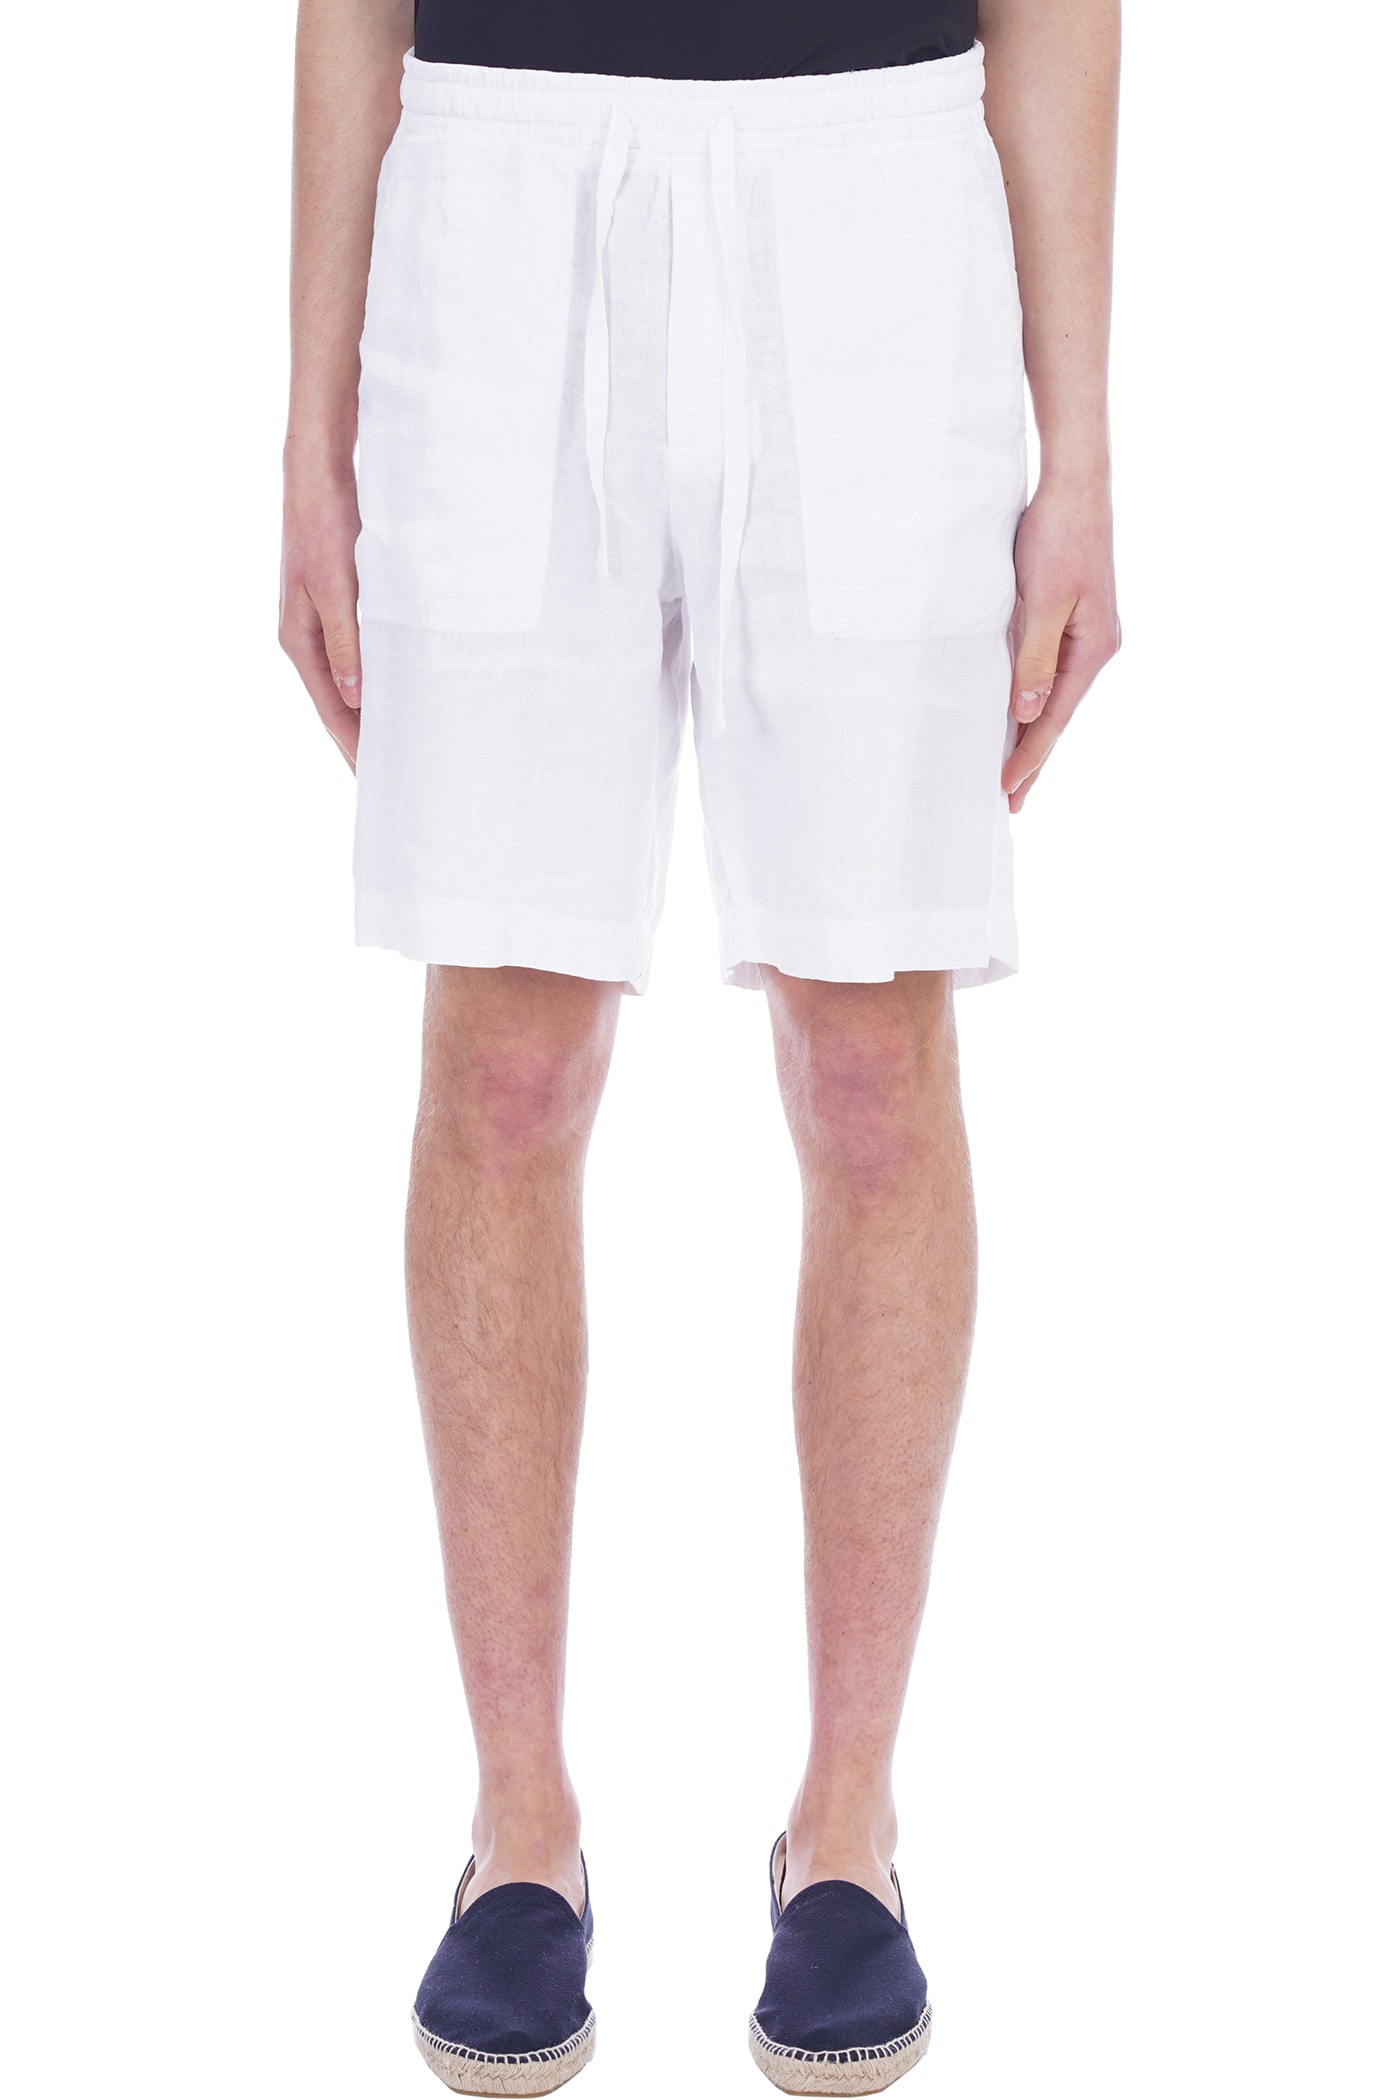 Z Zegna Shorts In White Linen